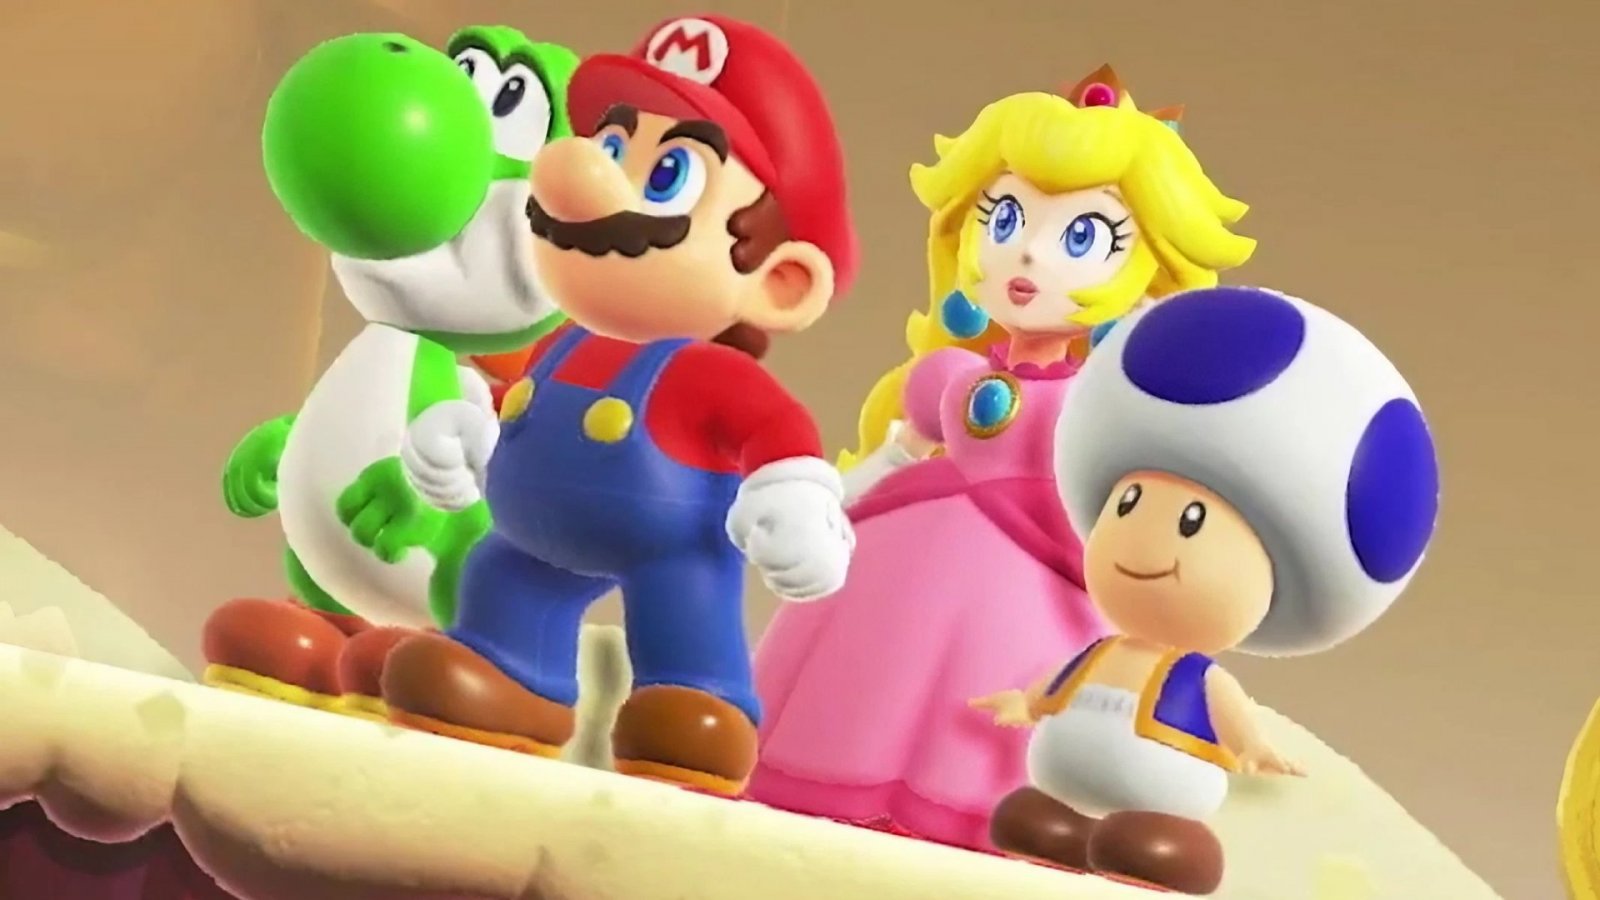 Classifica Nintendo eShop, Super Mario Bros. Wonder è ancora primo